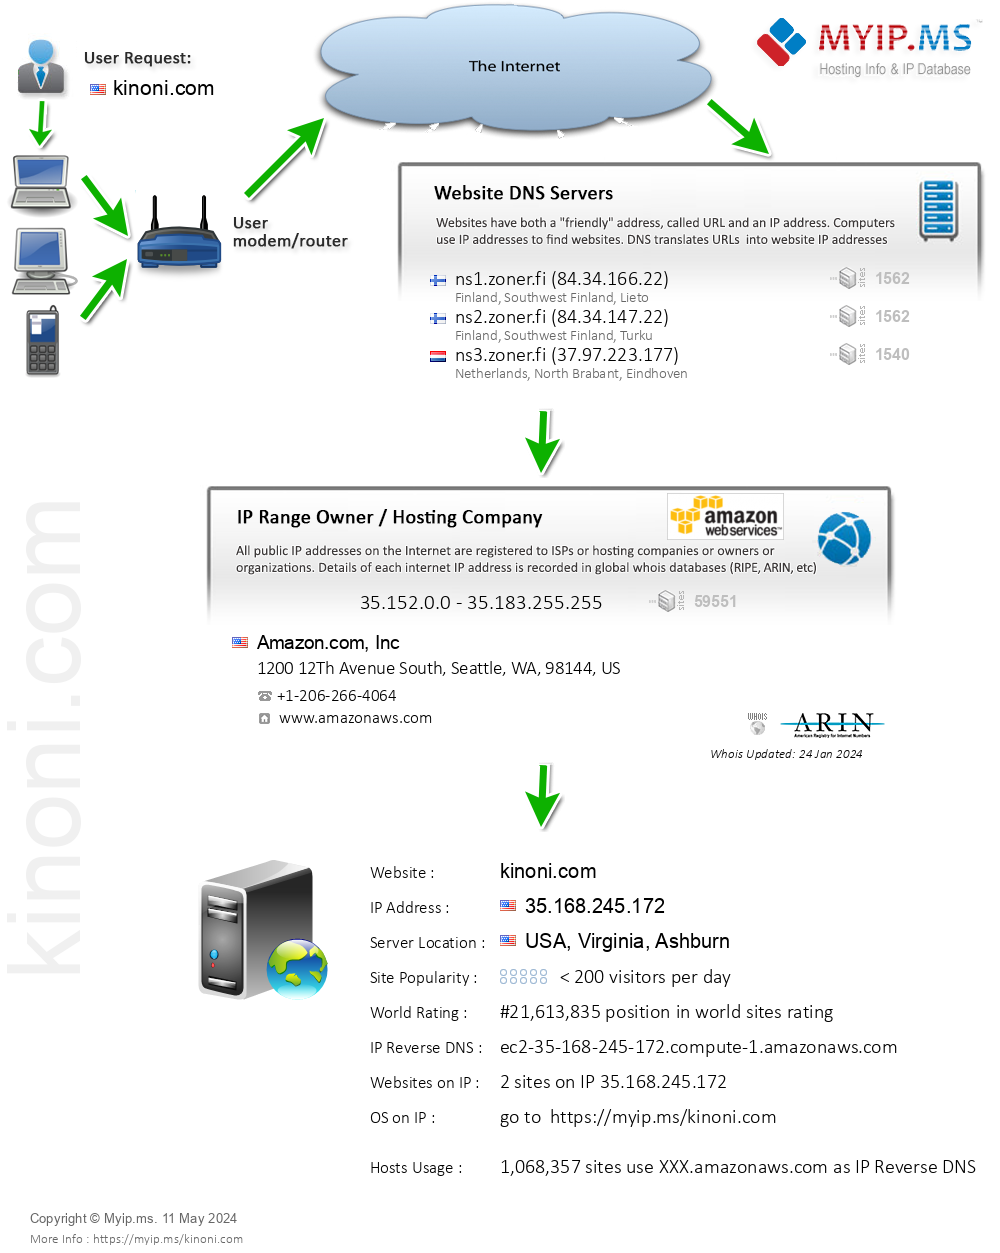 Kinoni.com - Website Hosting Visual IP Diagram